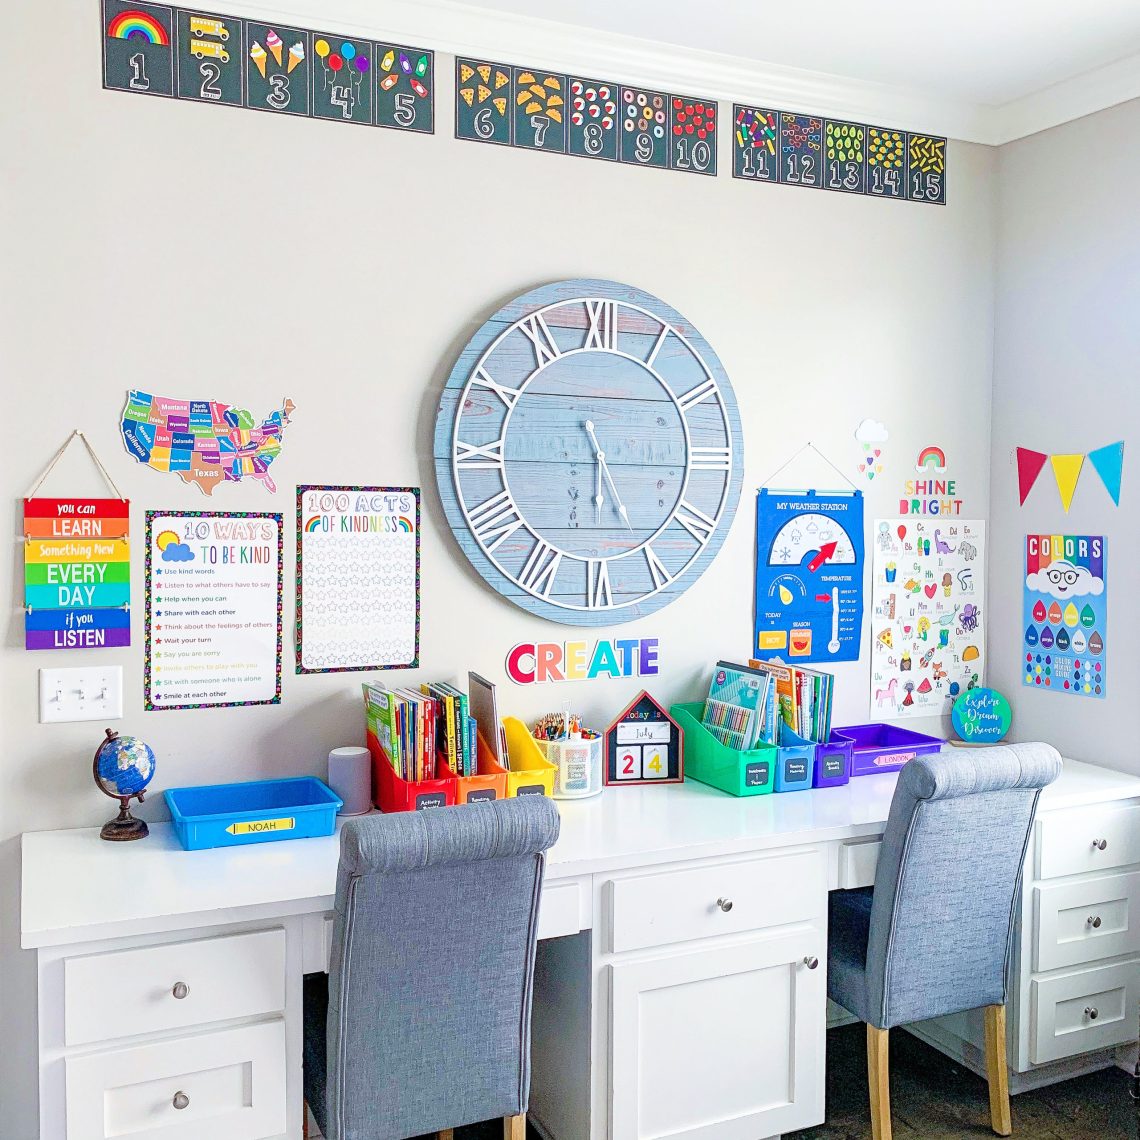 DIY Ideas for Creating a Homeschool Room